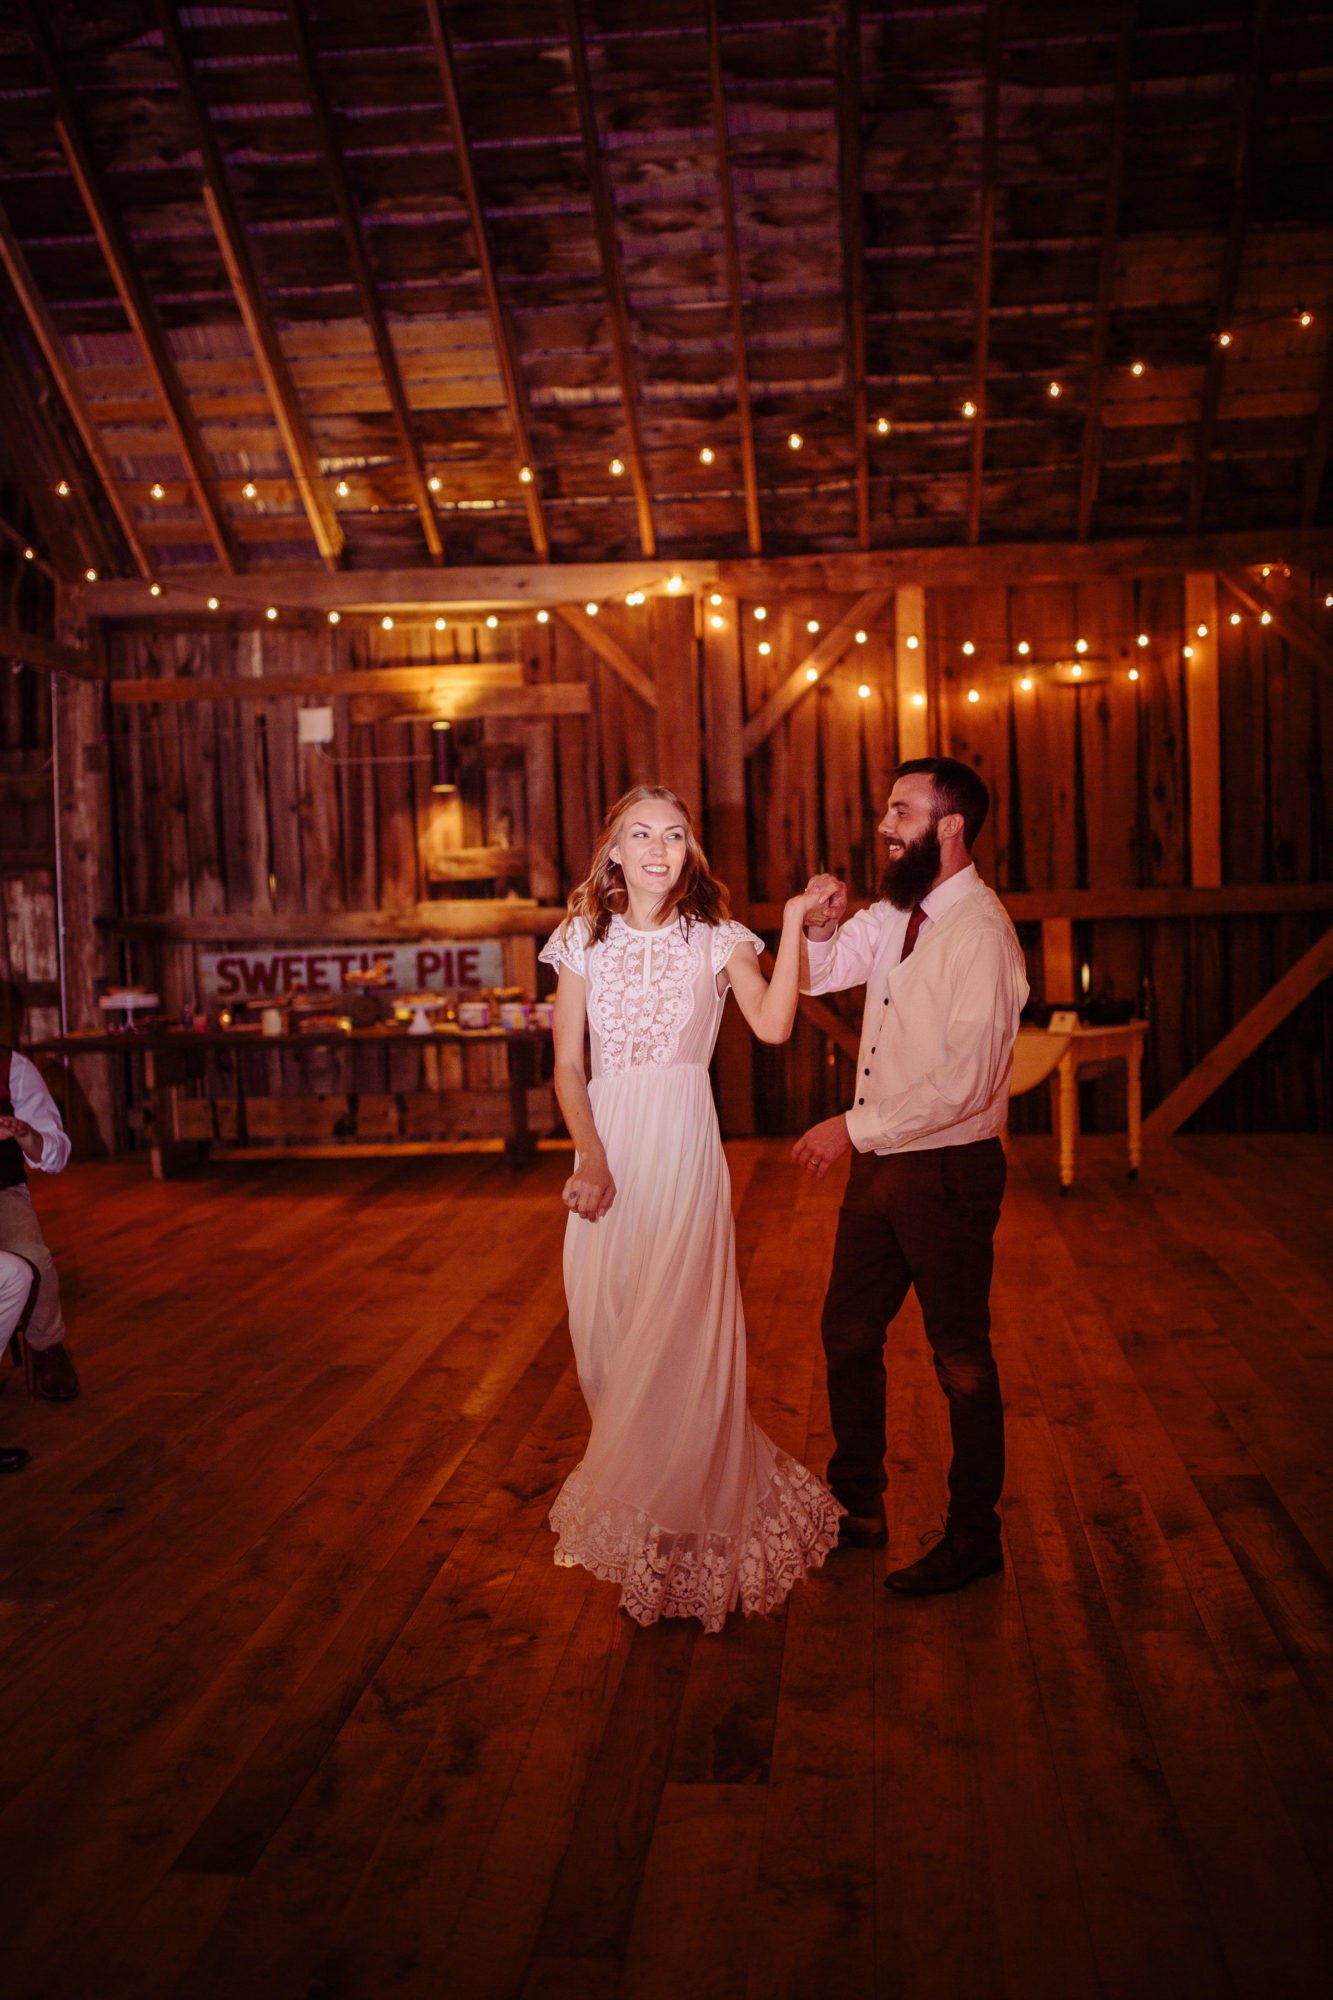 Starry Night Barn and Studios Wedding Dancing